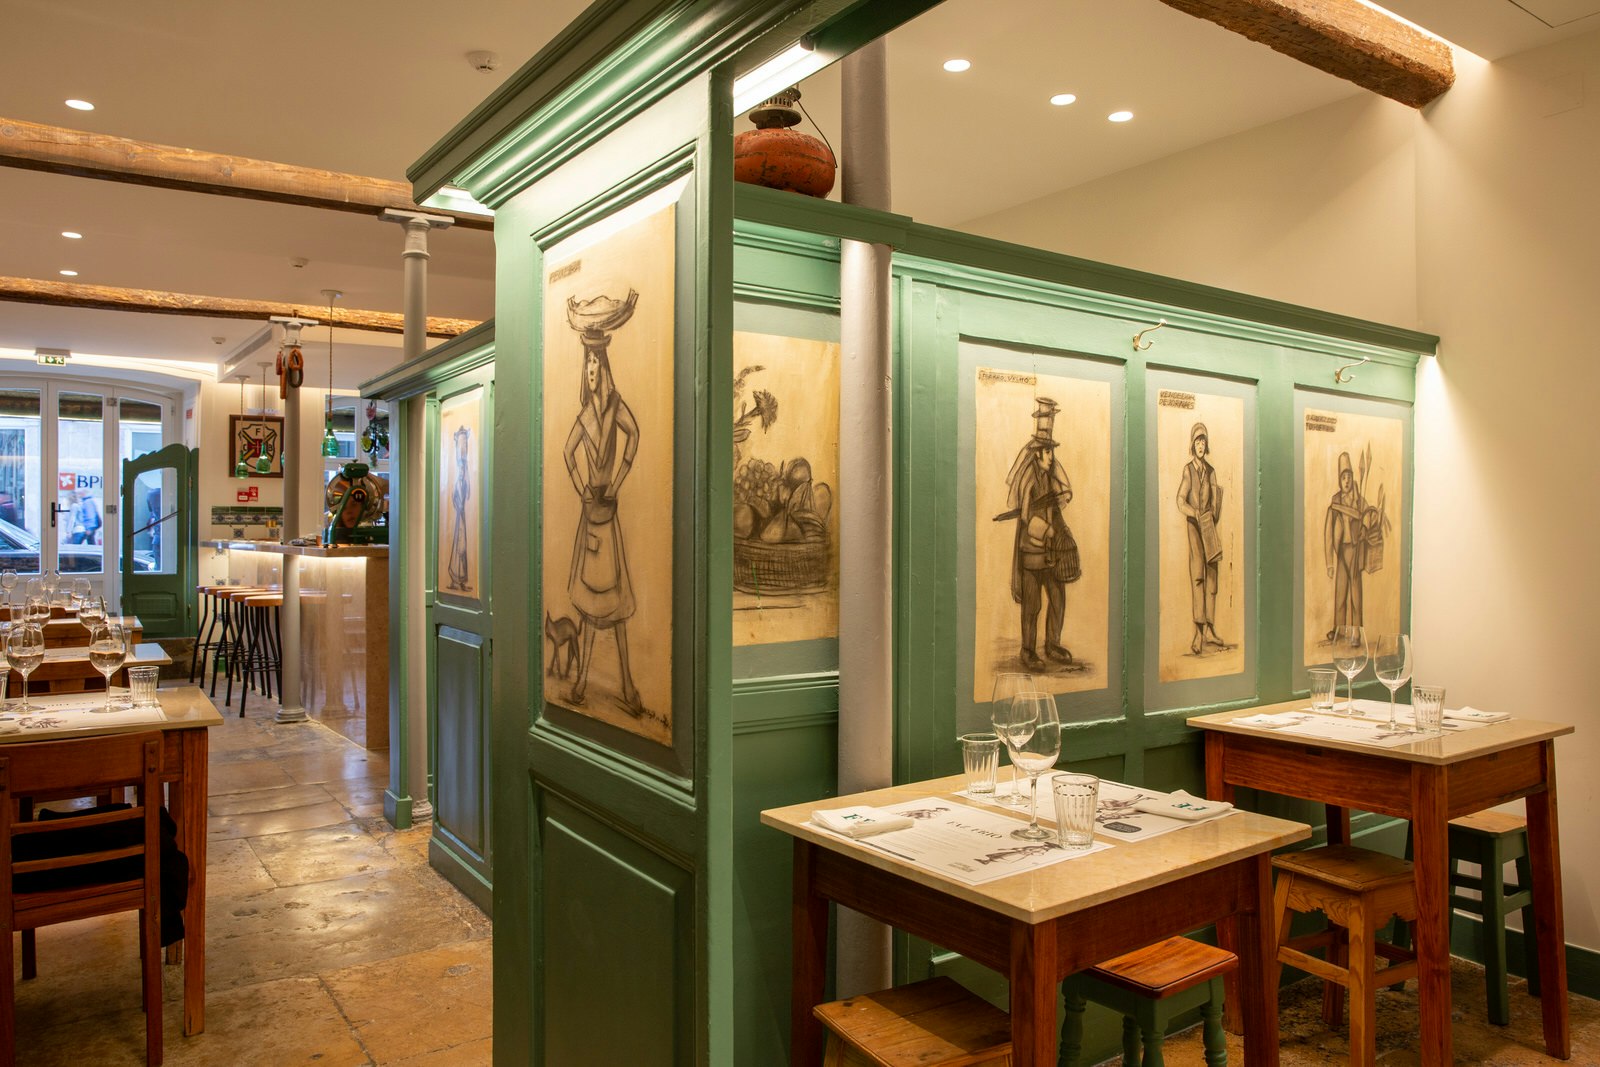 Faz Frio restaurant's interior with sage green walls and ink portraits, Lisbon.